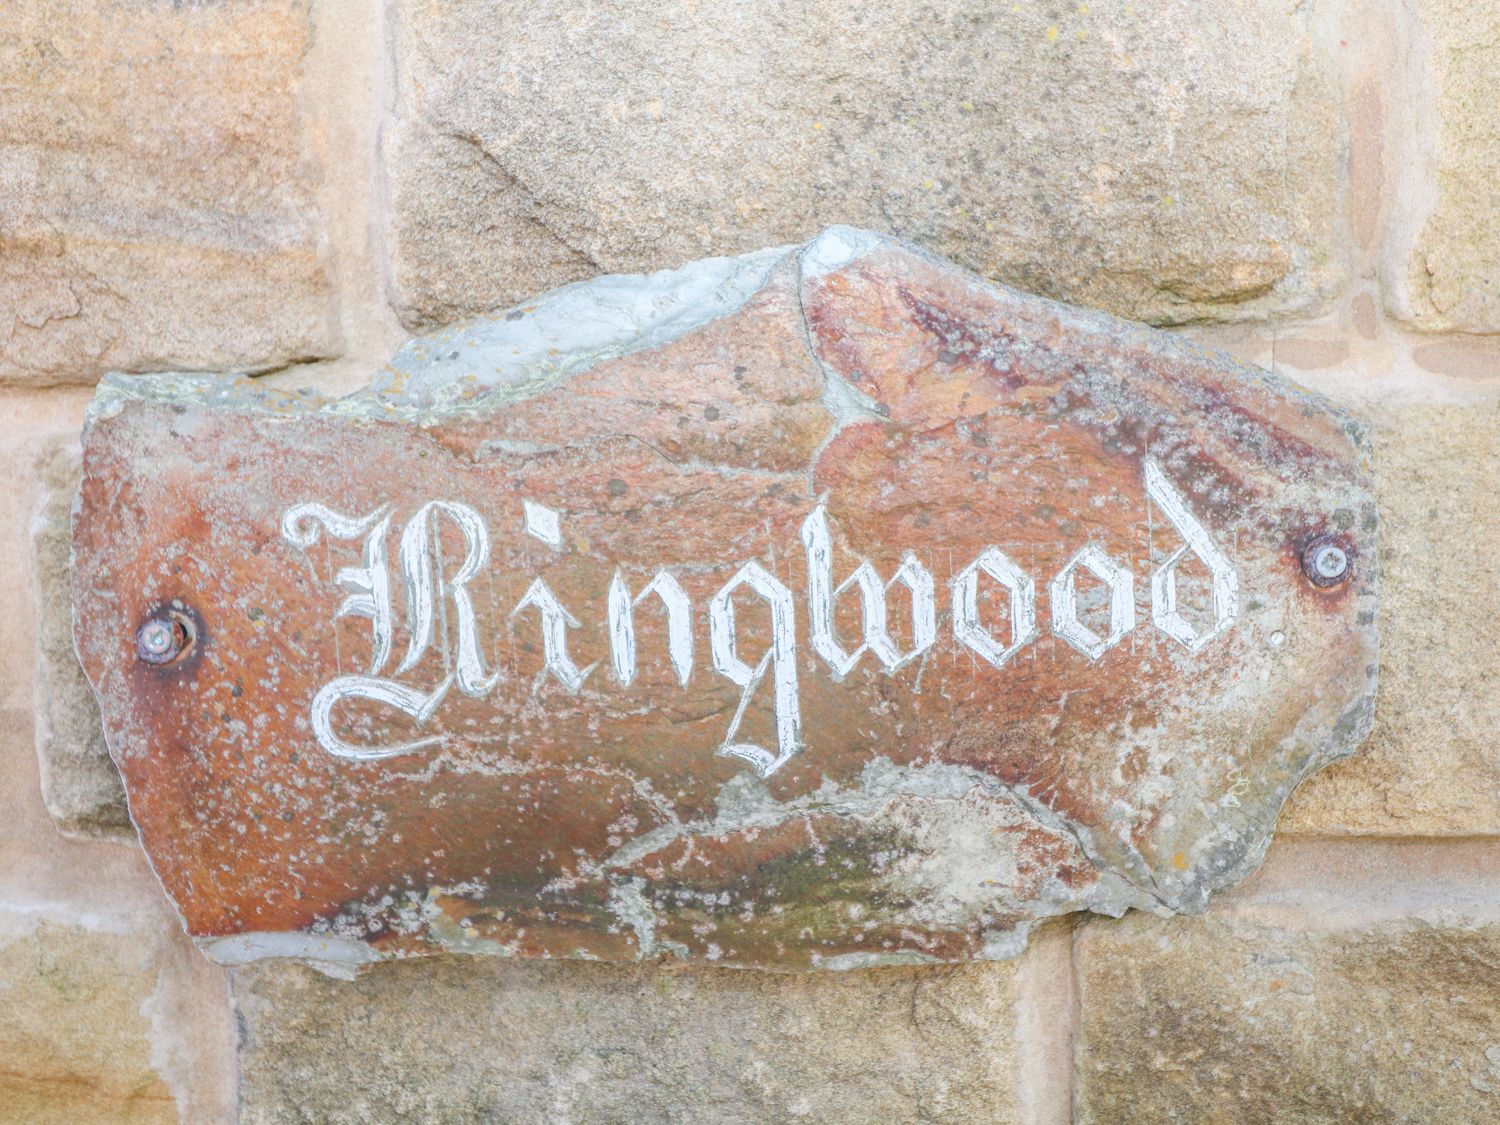 Ringwood, Stannington